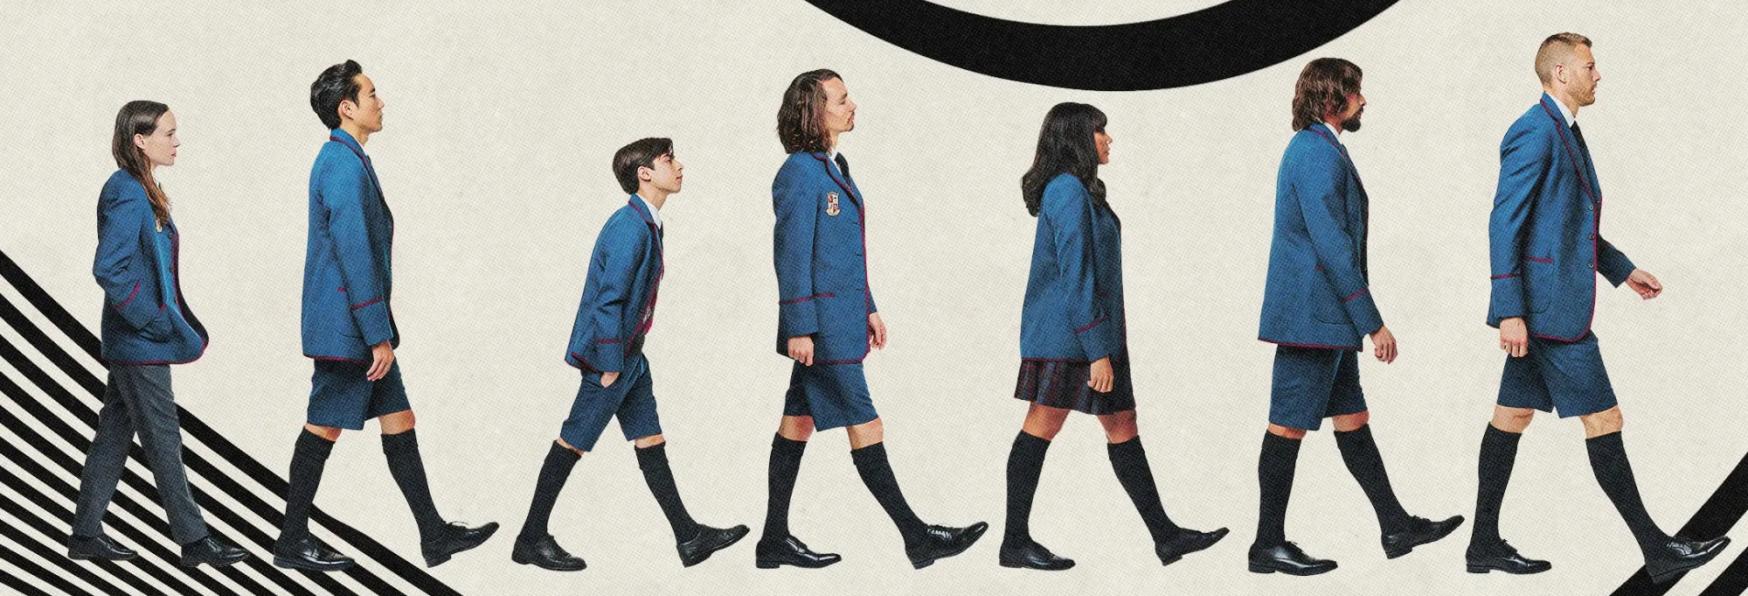 The Umbrella Academy 3: Netflix condivide i Poster dell'Umbrella e Sparrow Academy